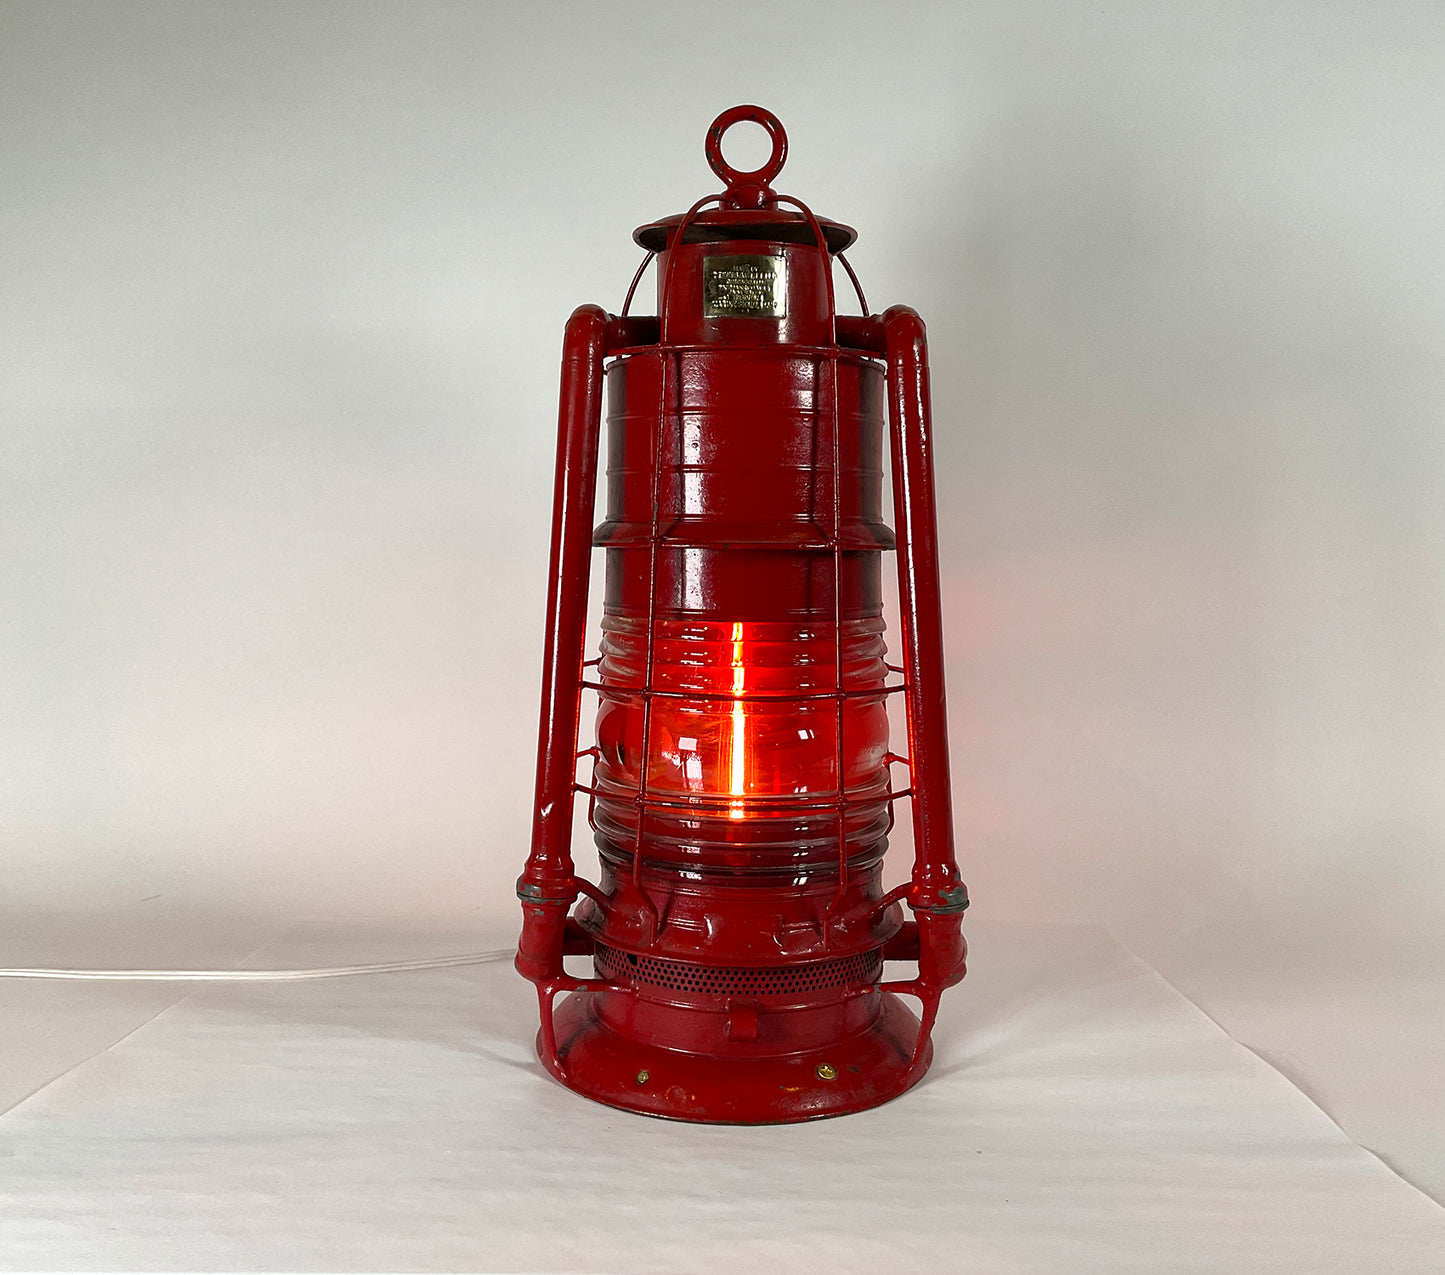 Maritime Signal Lantern by Chicago Maker - Lannan Gallery